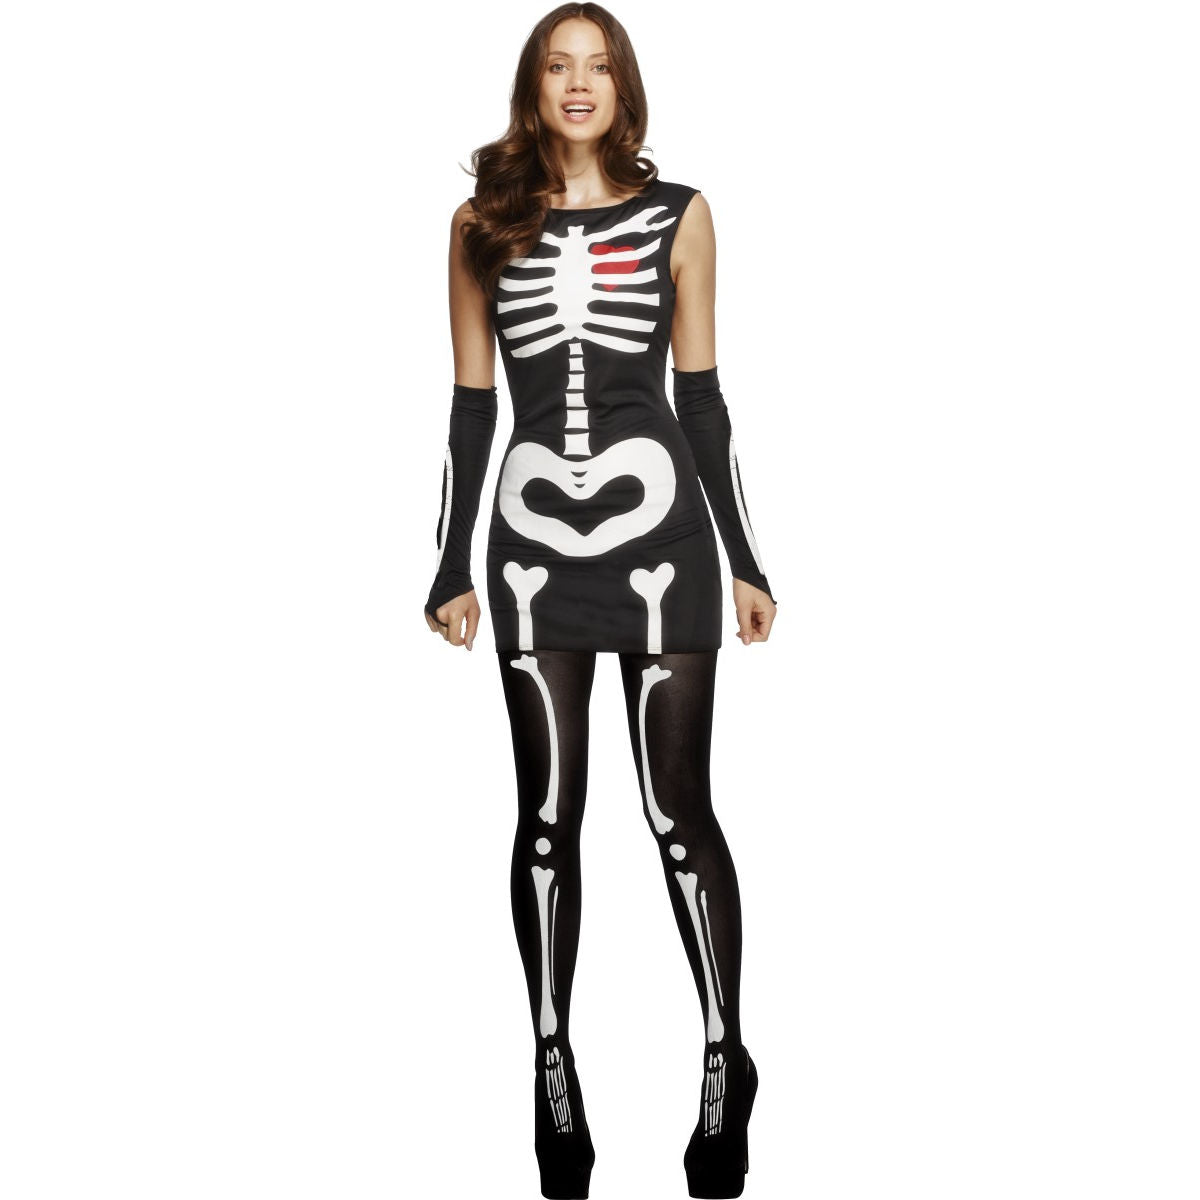 Sexy Skeleton Glow in the Dark Women's Costume